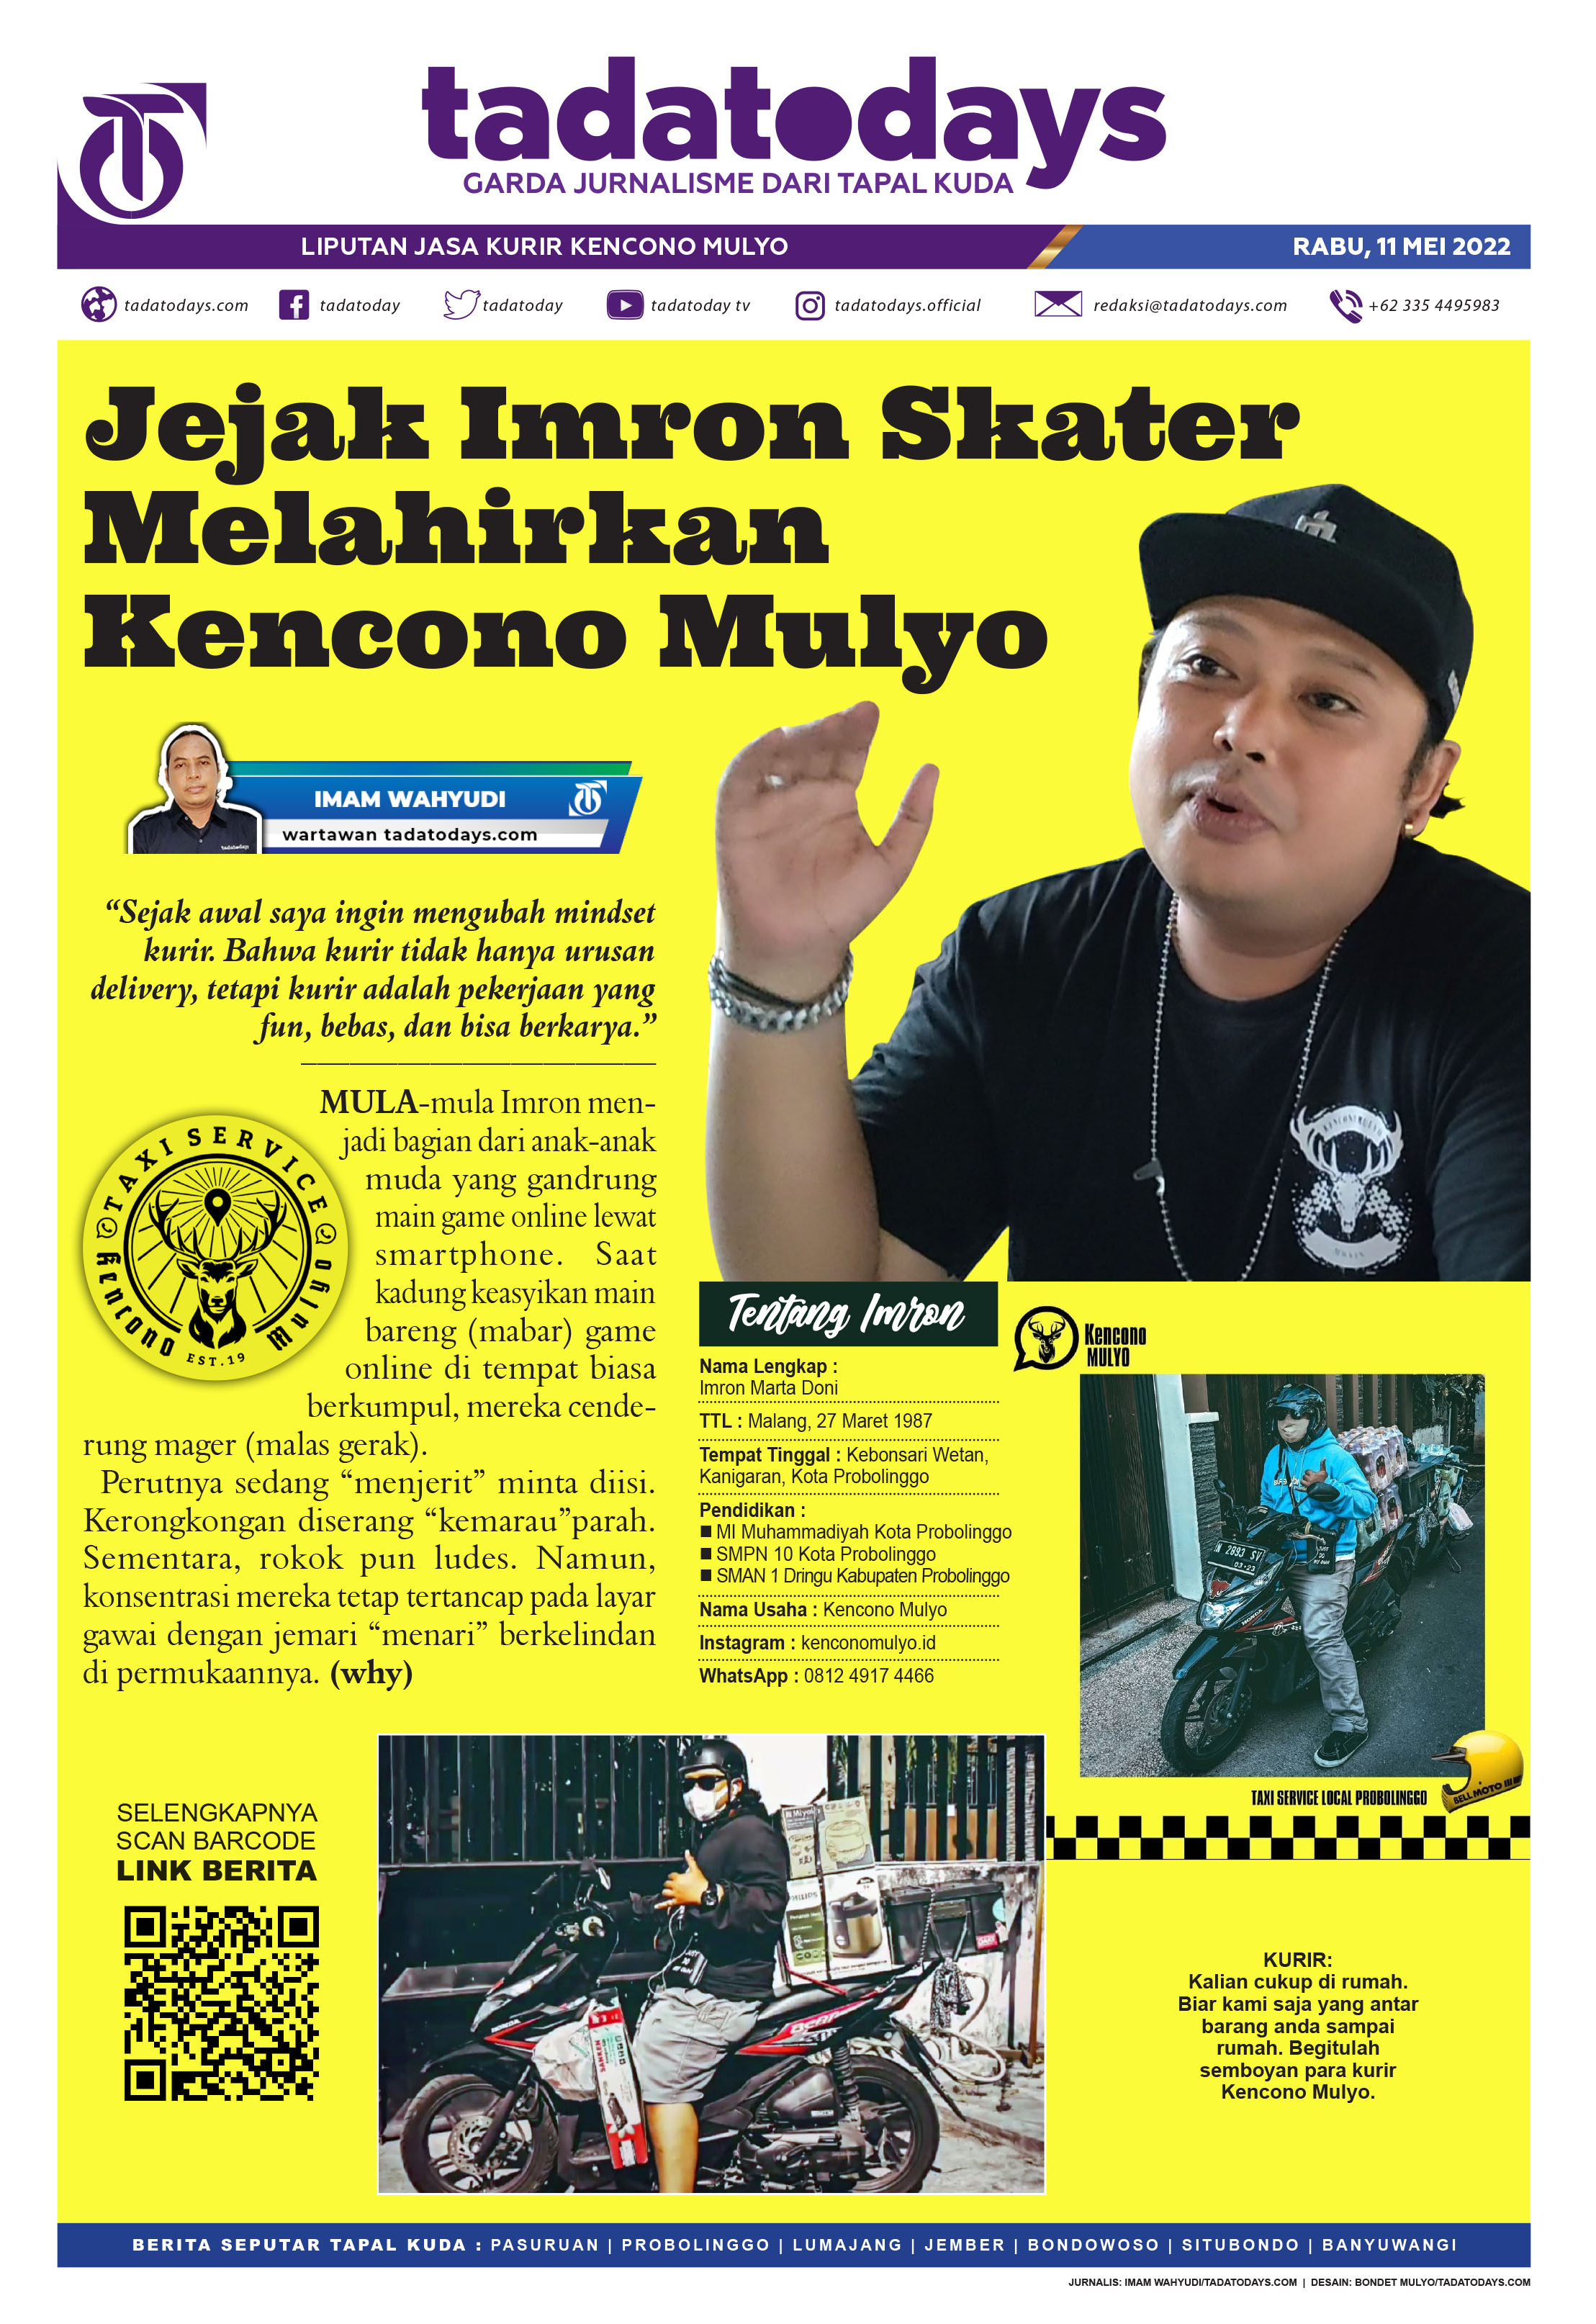 Jejak Imron Skater Lahirkan Kencono Mulyo